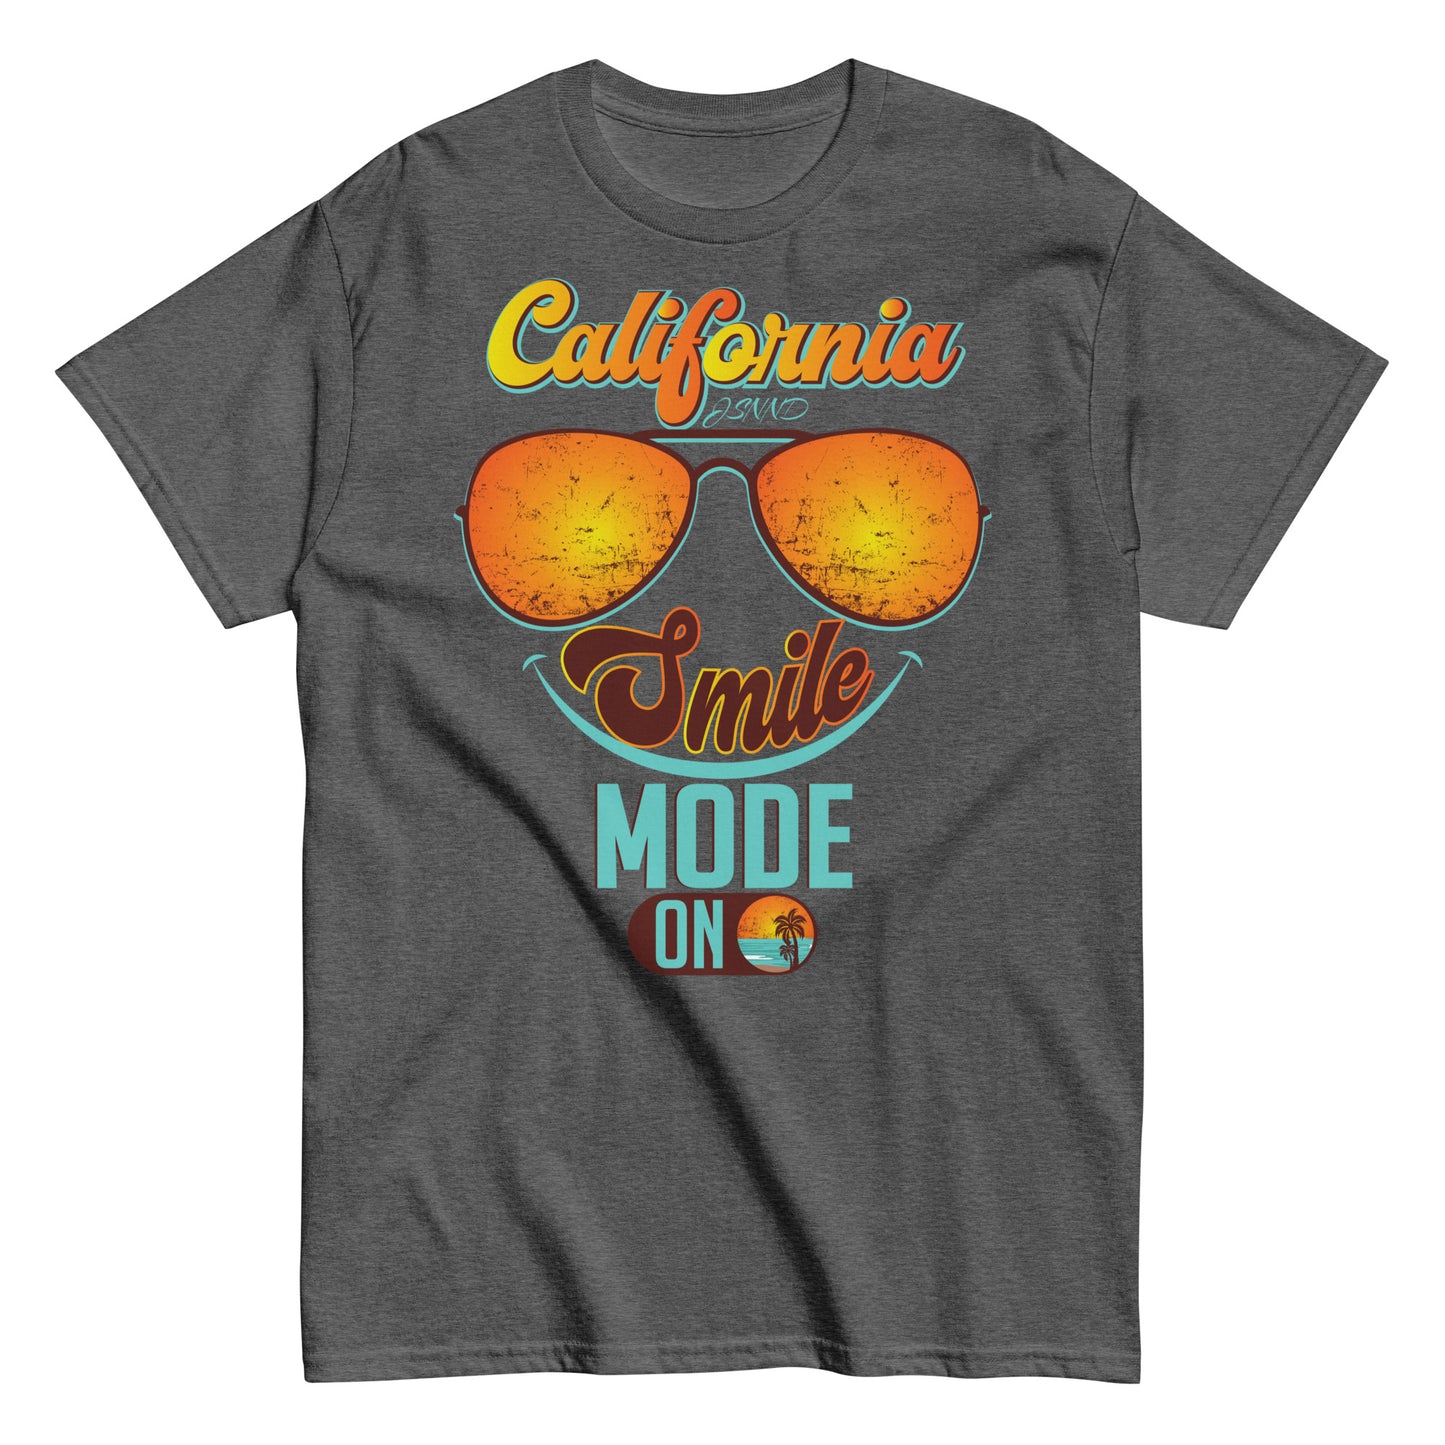 California Smile classic tee